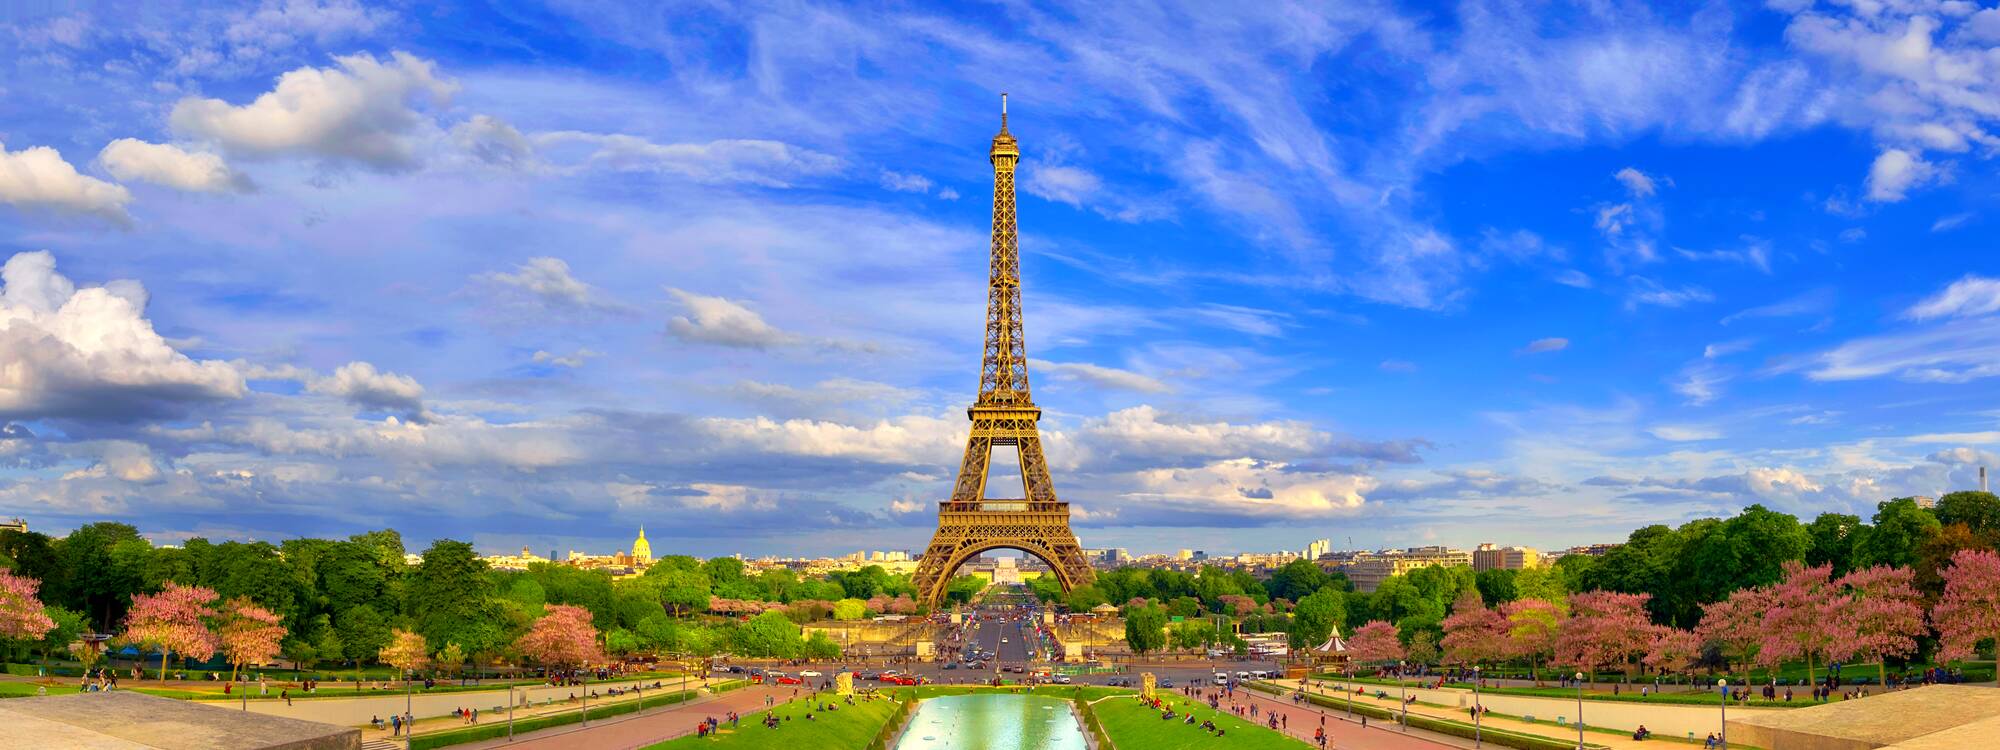 Eiffelturms im Frühjahr in Paris